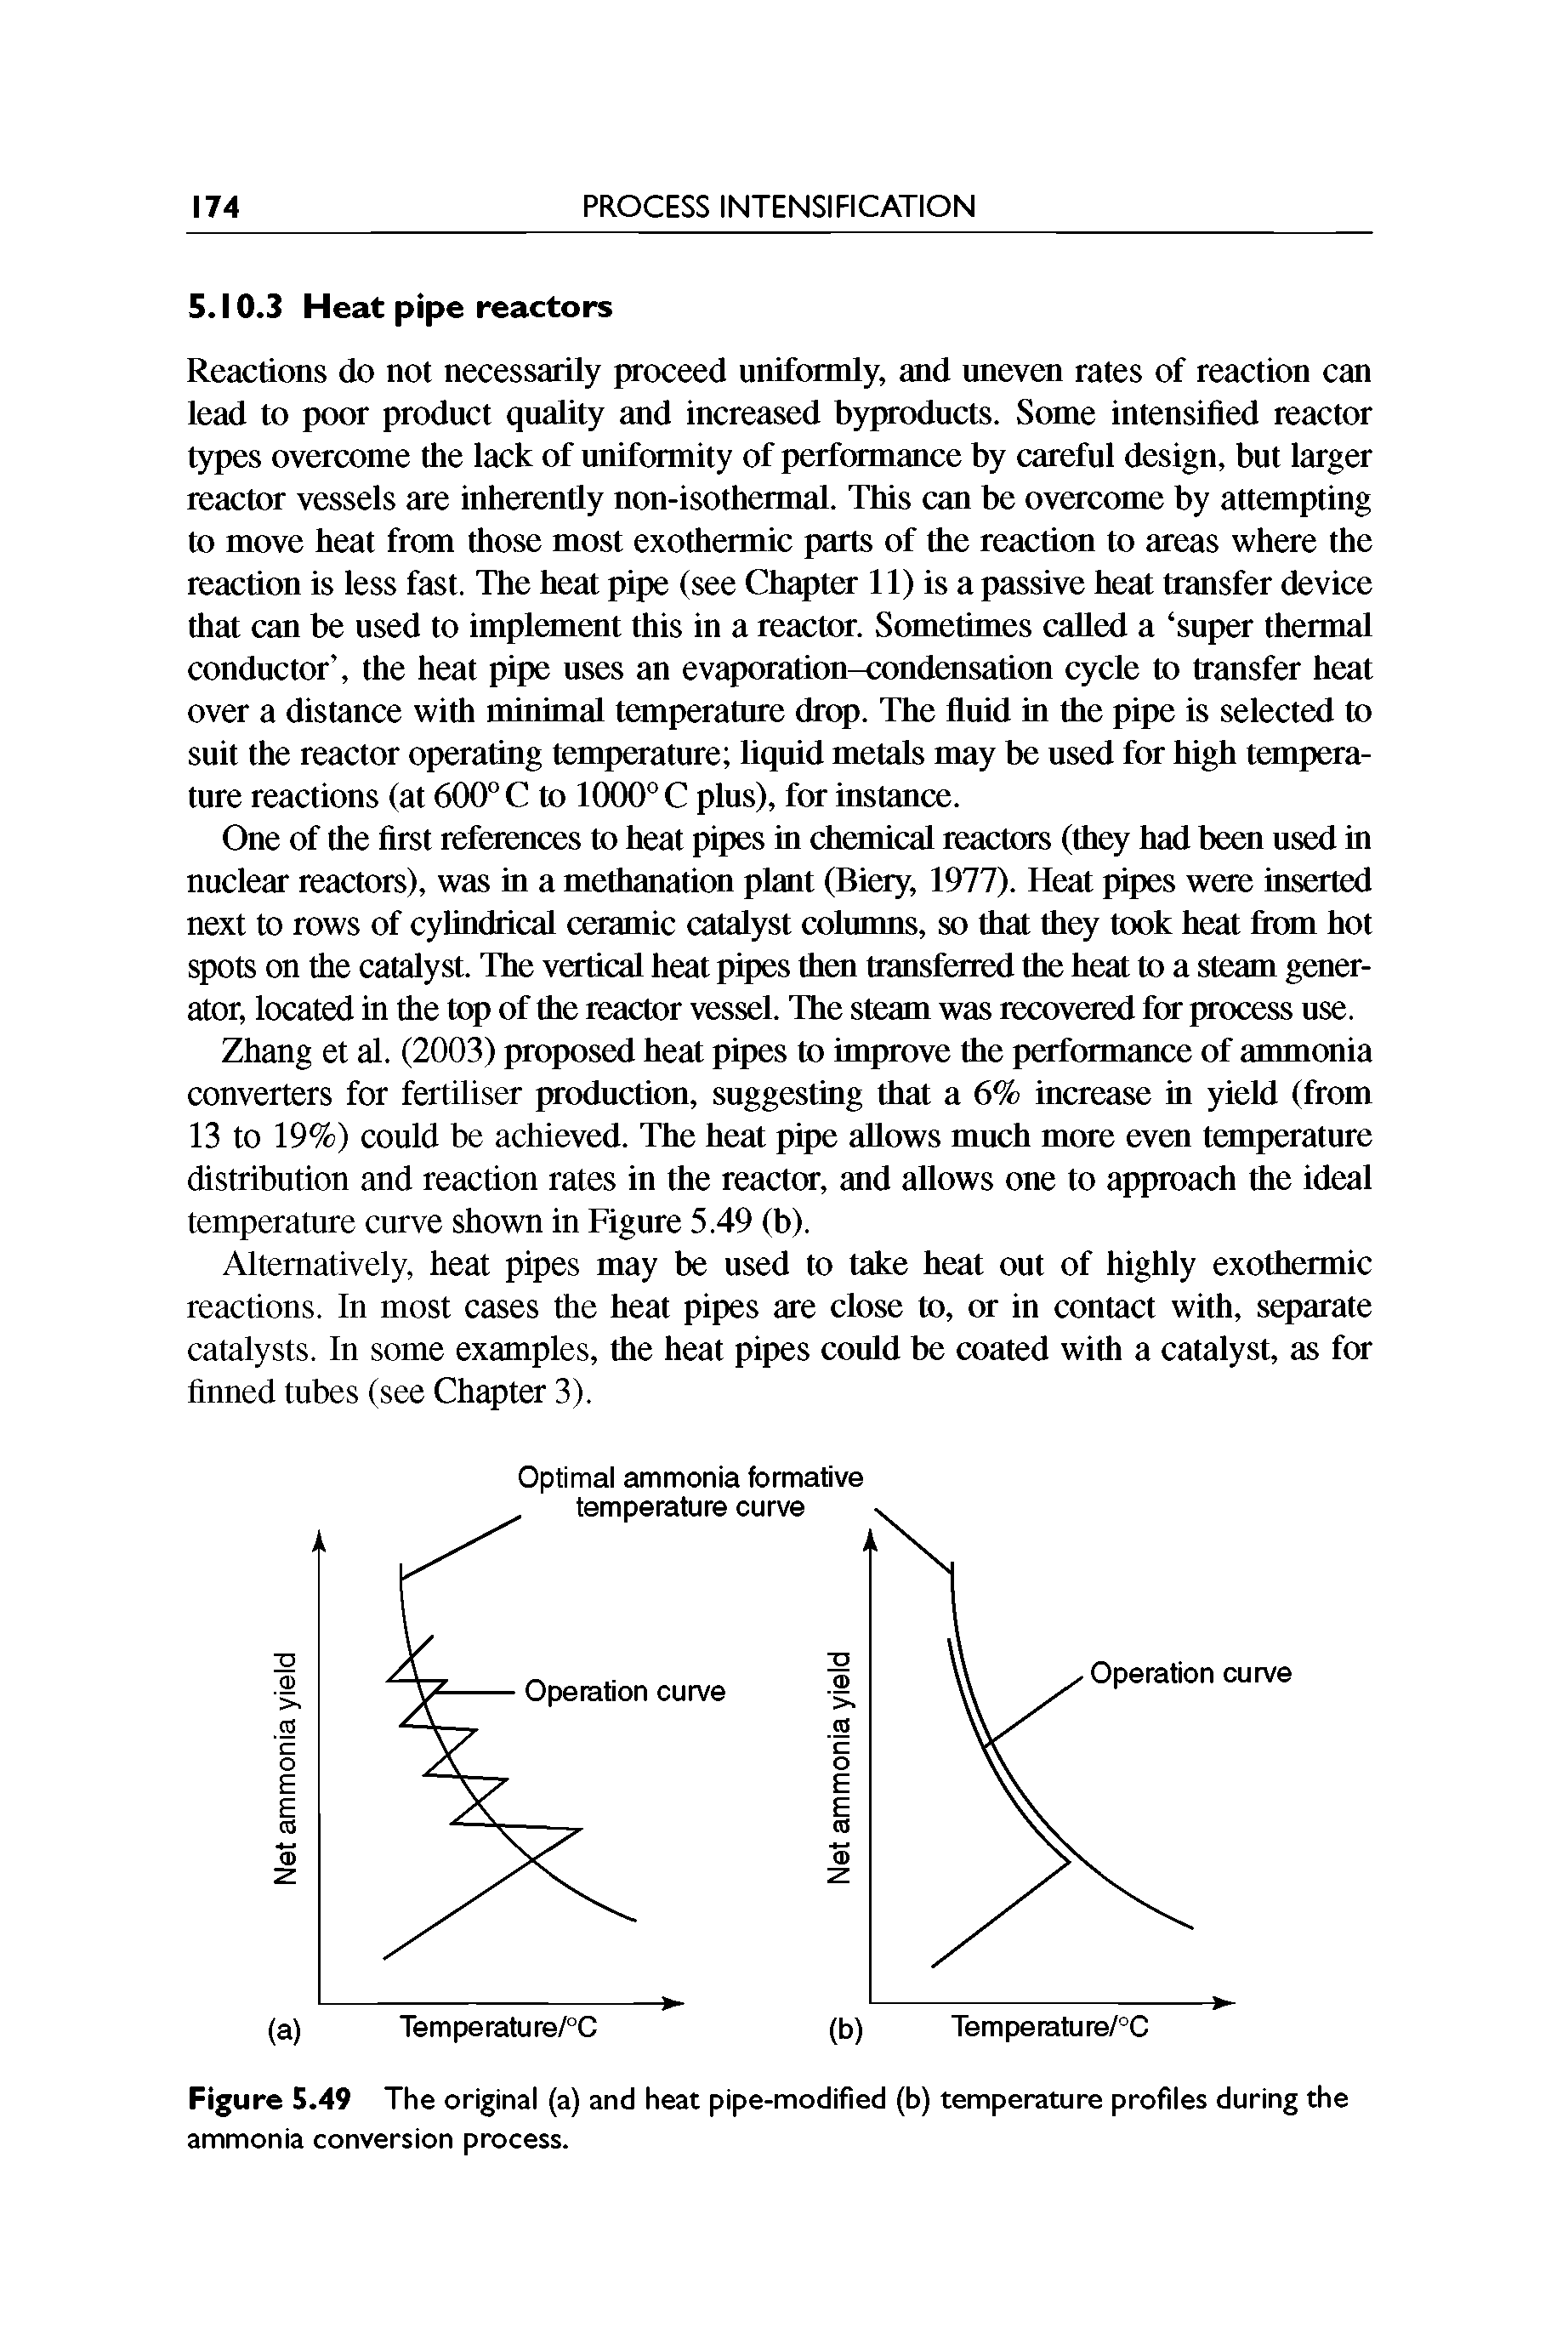 Figure 5.49 The original (a) and heat pipe-modified (b) temperature profiles during the ammonia conversion process.